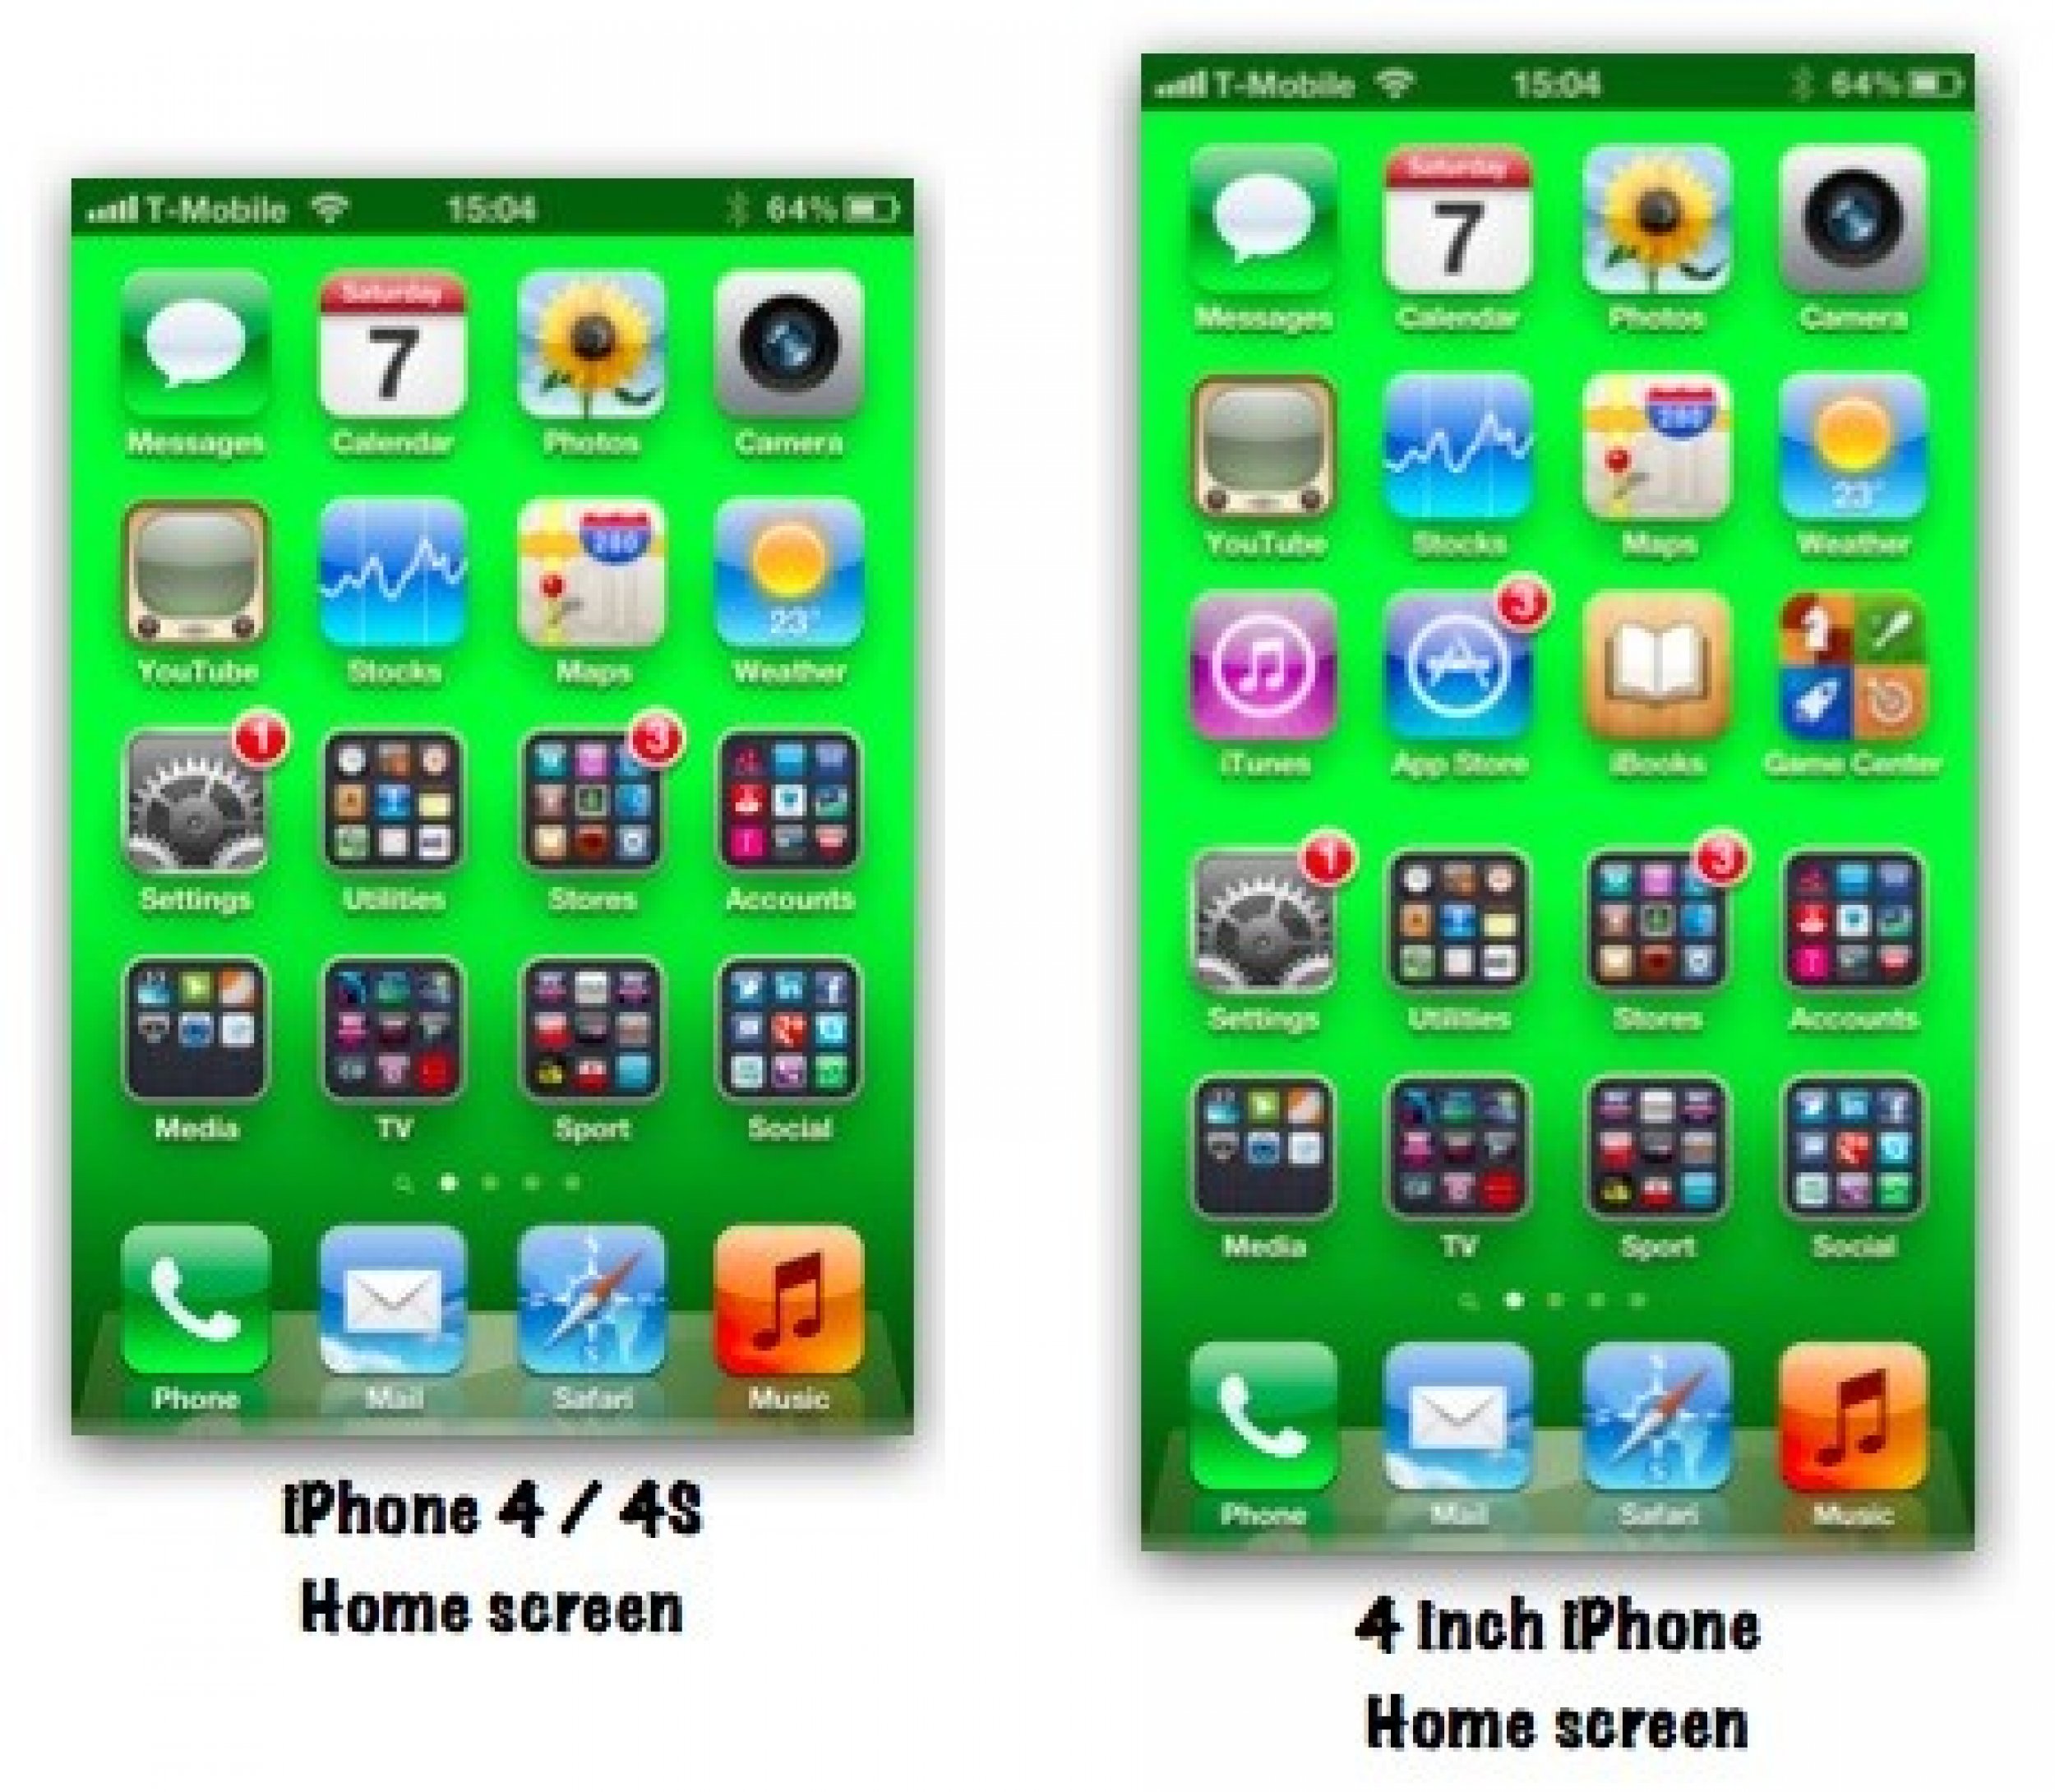 Apple iPhone 5 quot4-Inchquot Concept